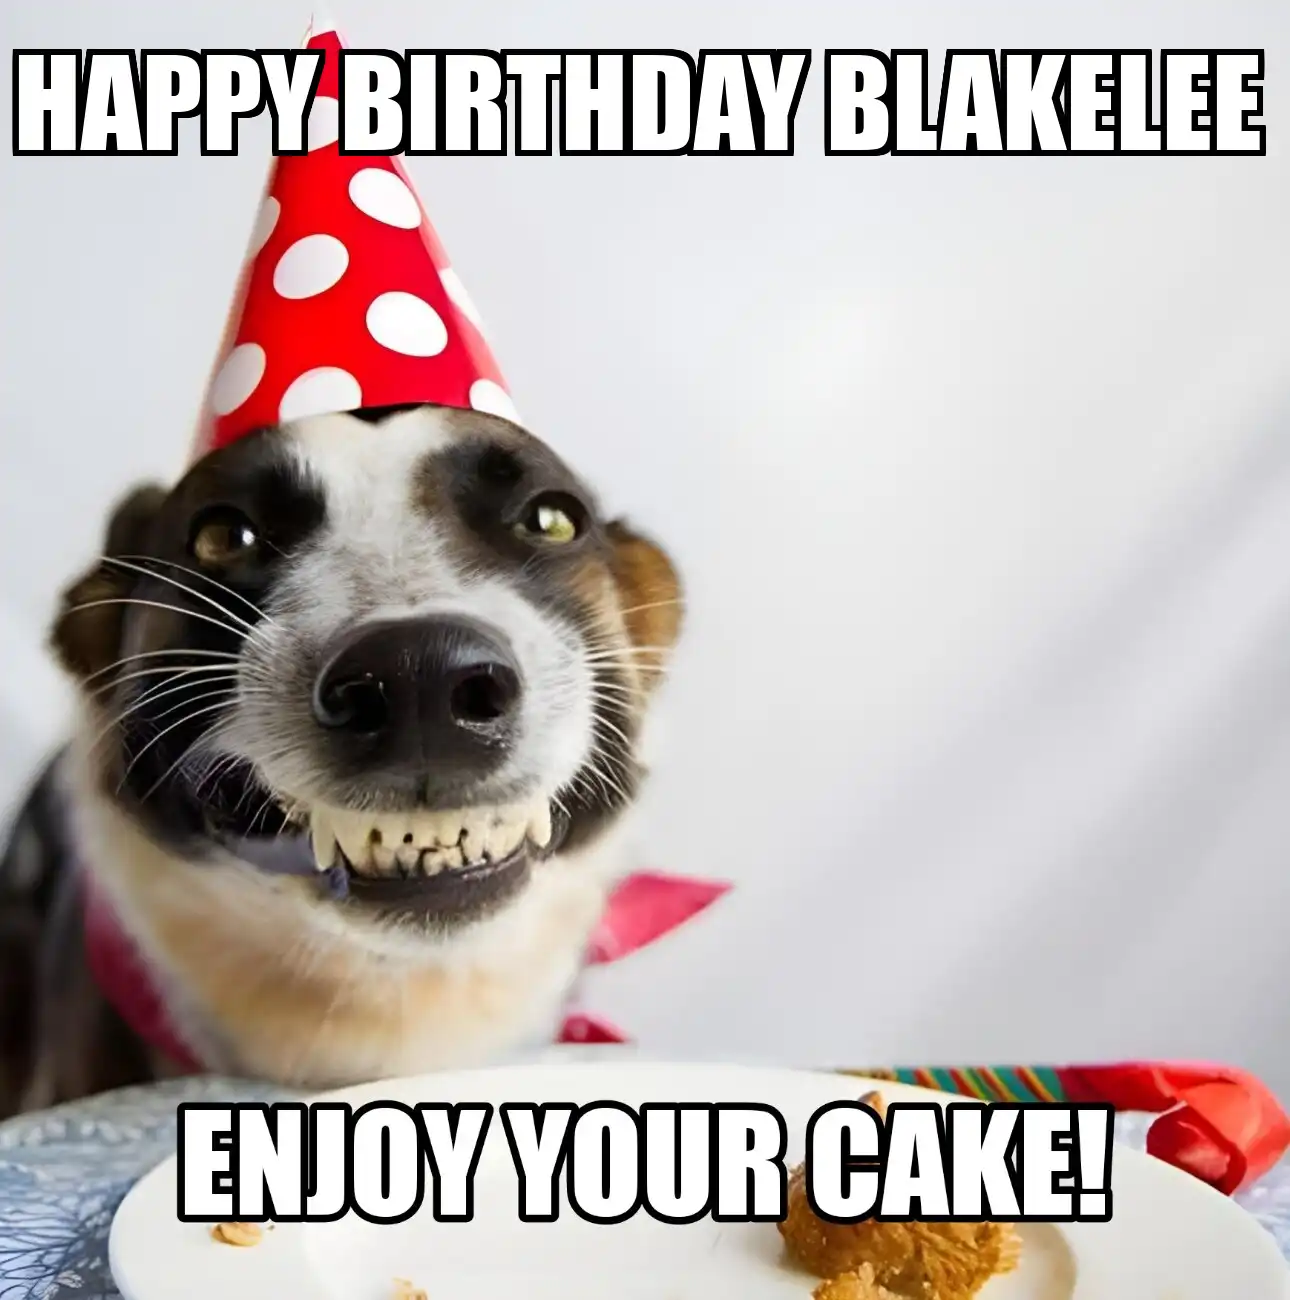 Happy Birthday Blakelee Enjoy Your Cake Dog Meme